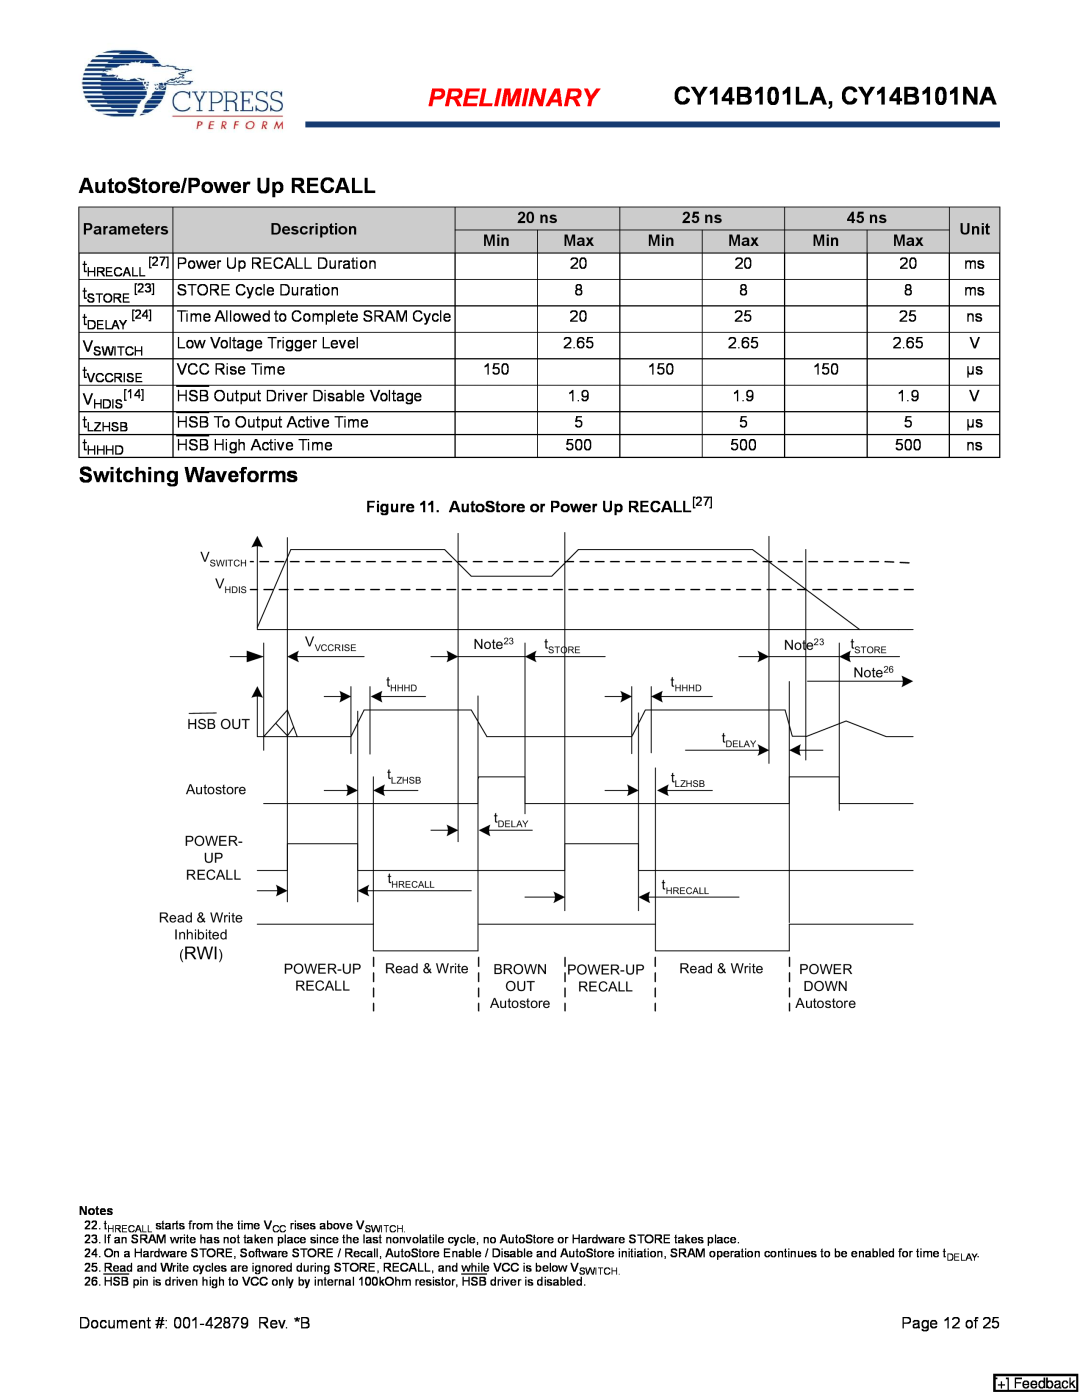 Cypress manual AutoStore/Power Up RECALL, Preliminary, CY14B101LA, CY14B101NA, Switching Waveforms 